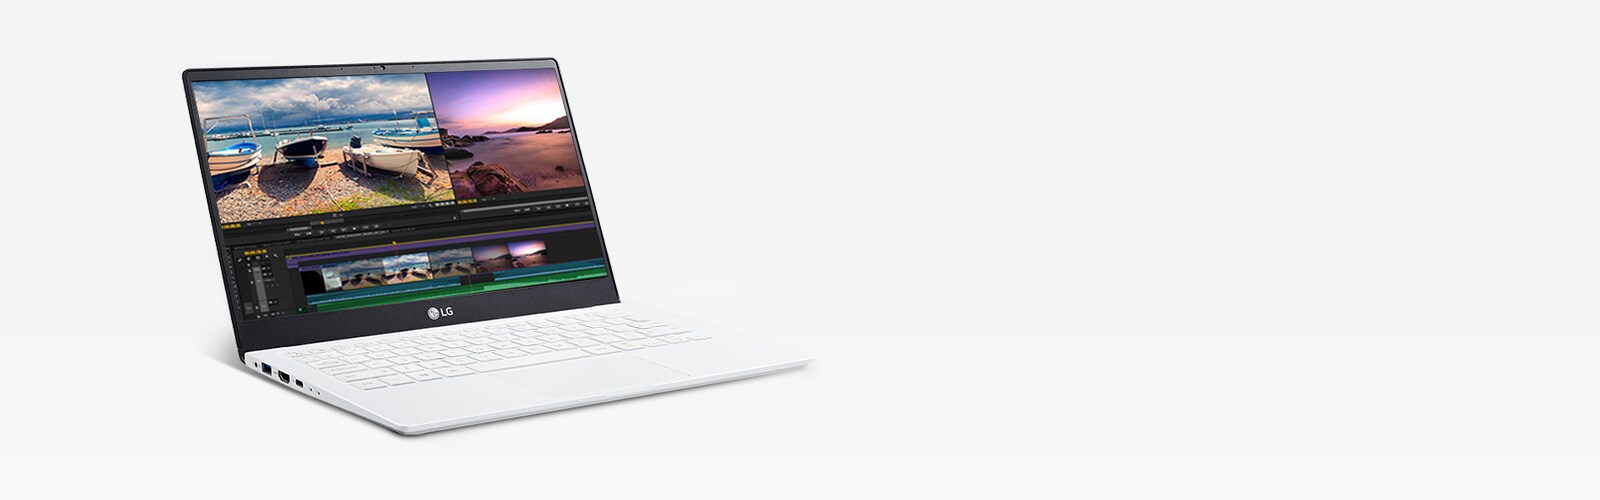 white LG laptop on gray background